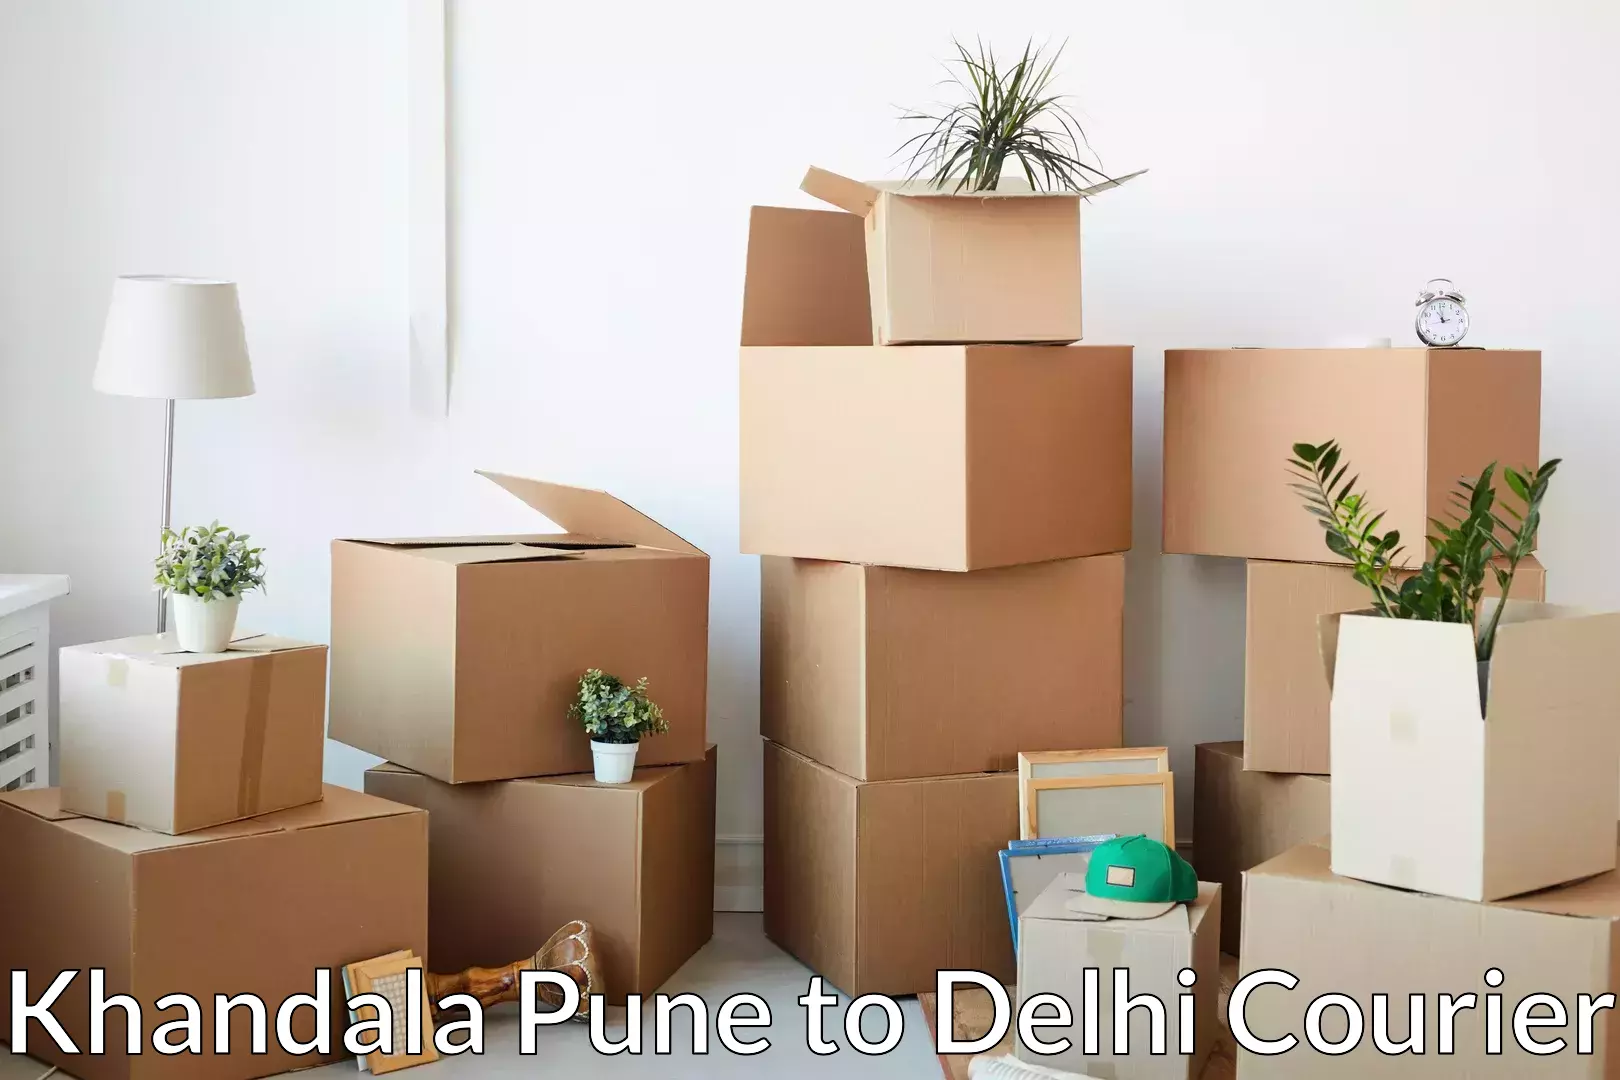 Professional home movers Khandala Pune to Lodhi Road